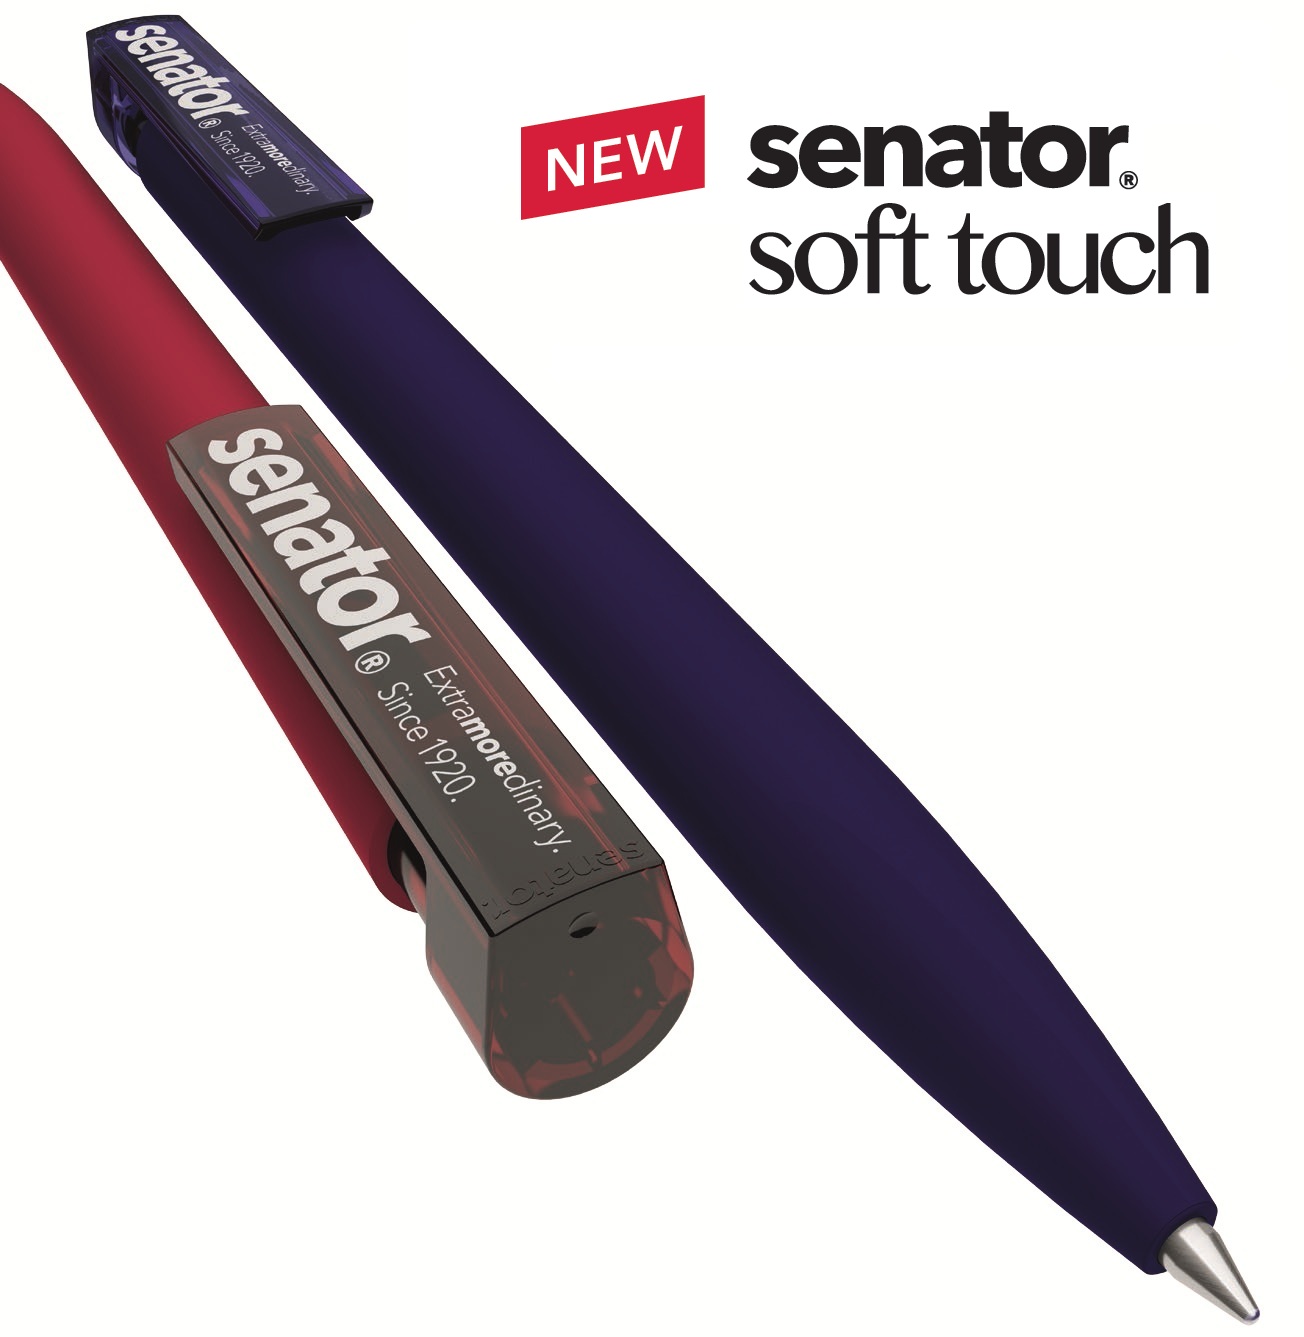 stylos senator soft touch